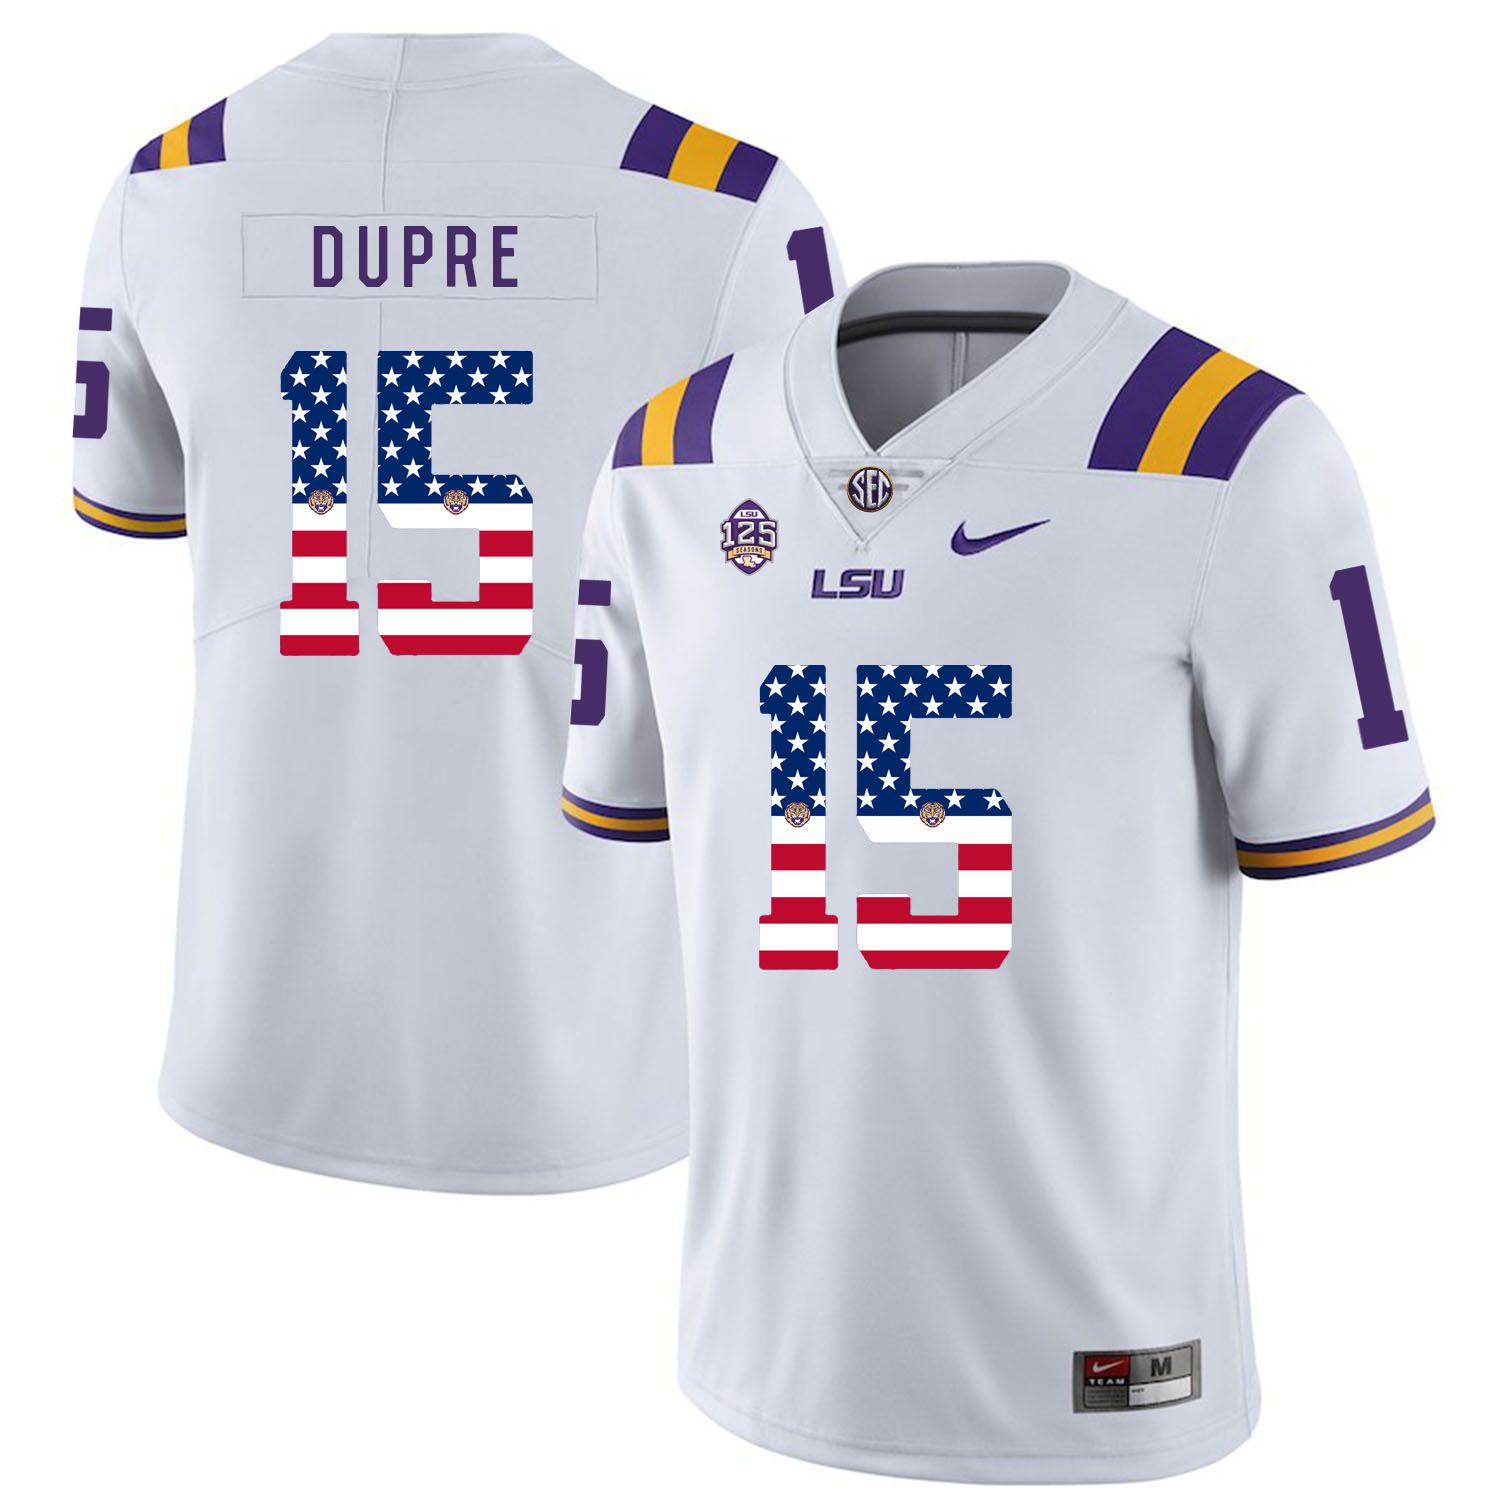 Men LSU Tigers 15 Dupre White Flag Customized NCAA Jerseys